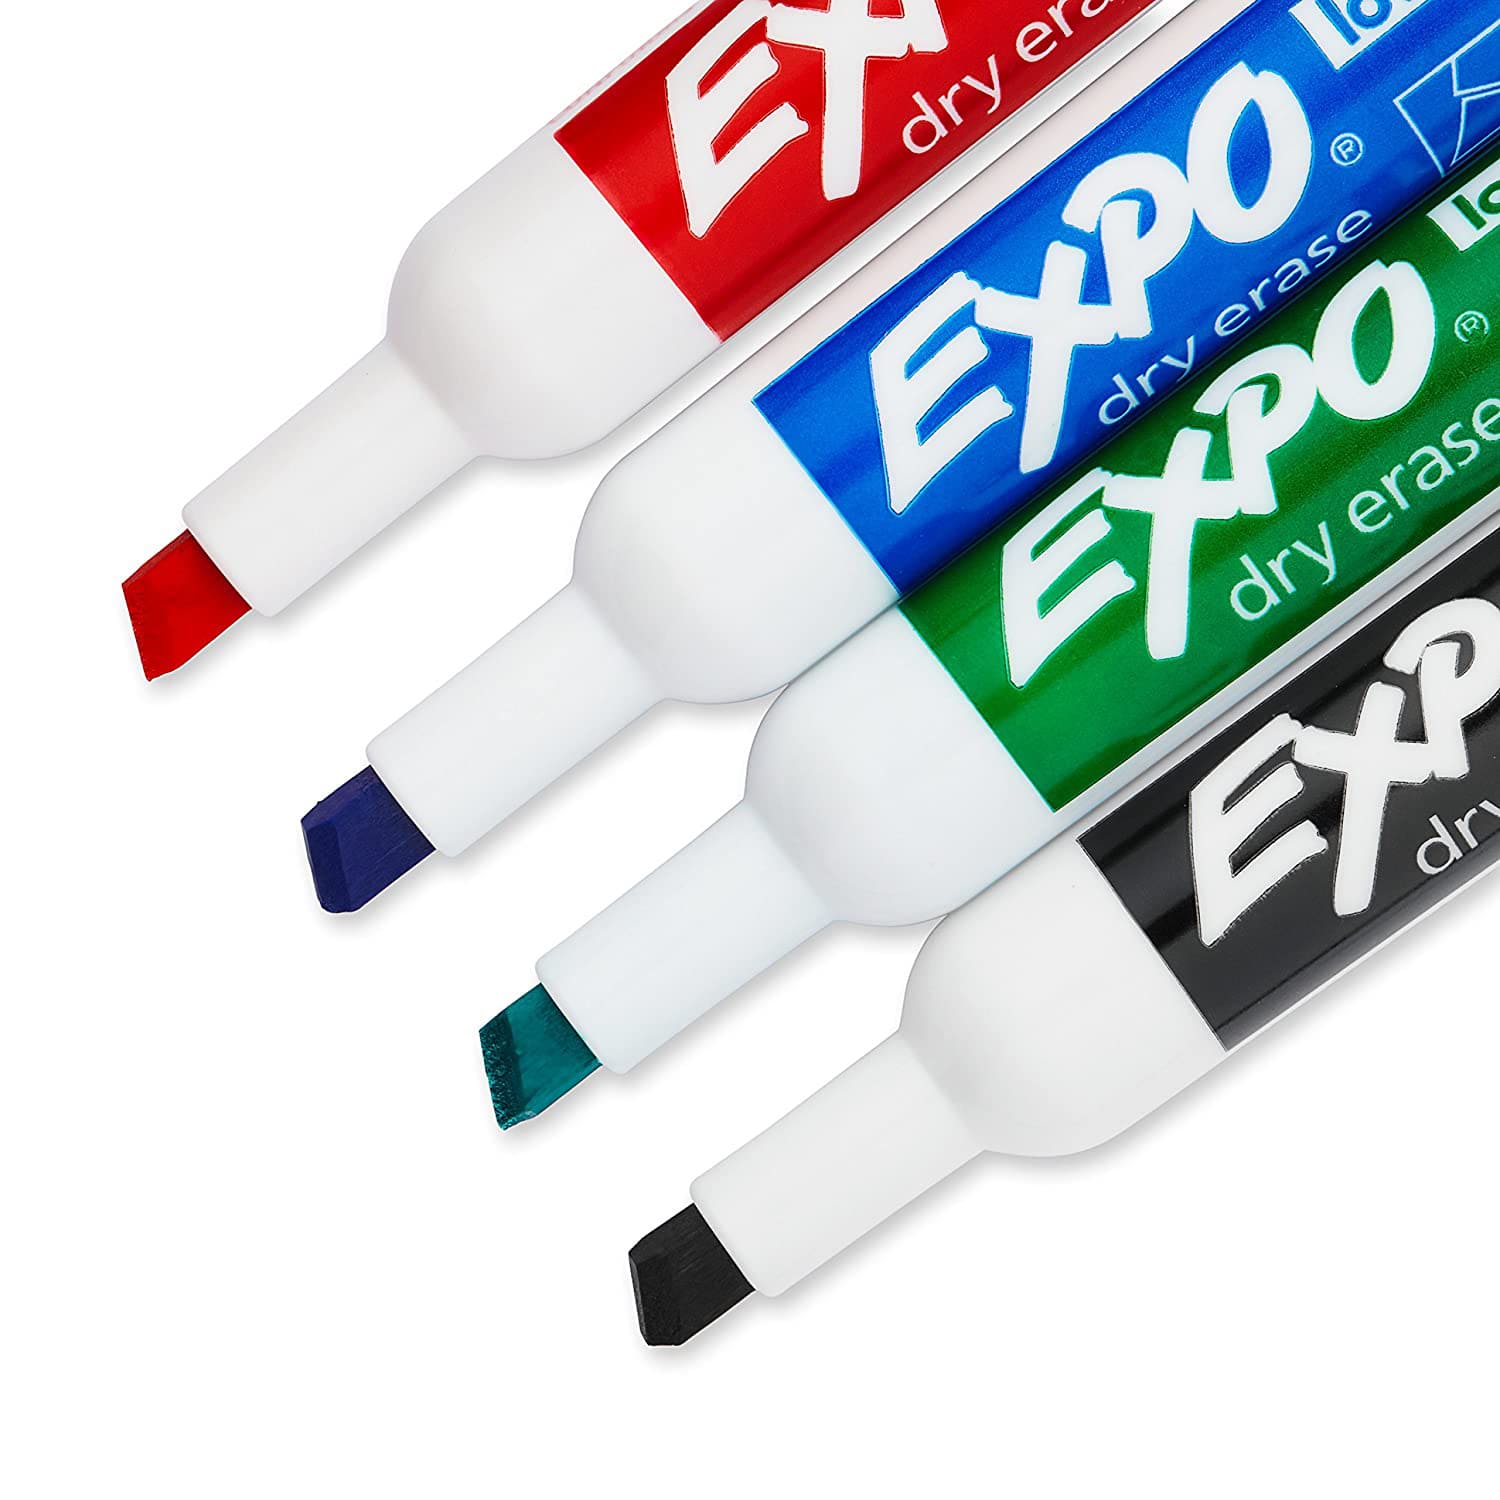 12 Packs: 4 ct. (48 total) Expo&#xAE; Chisel Tip Dry Erase Marker Set